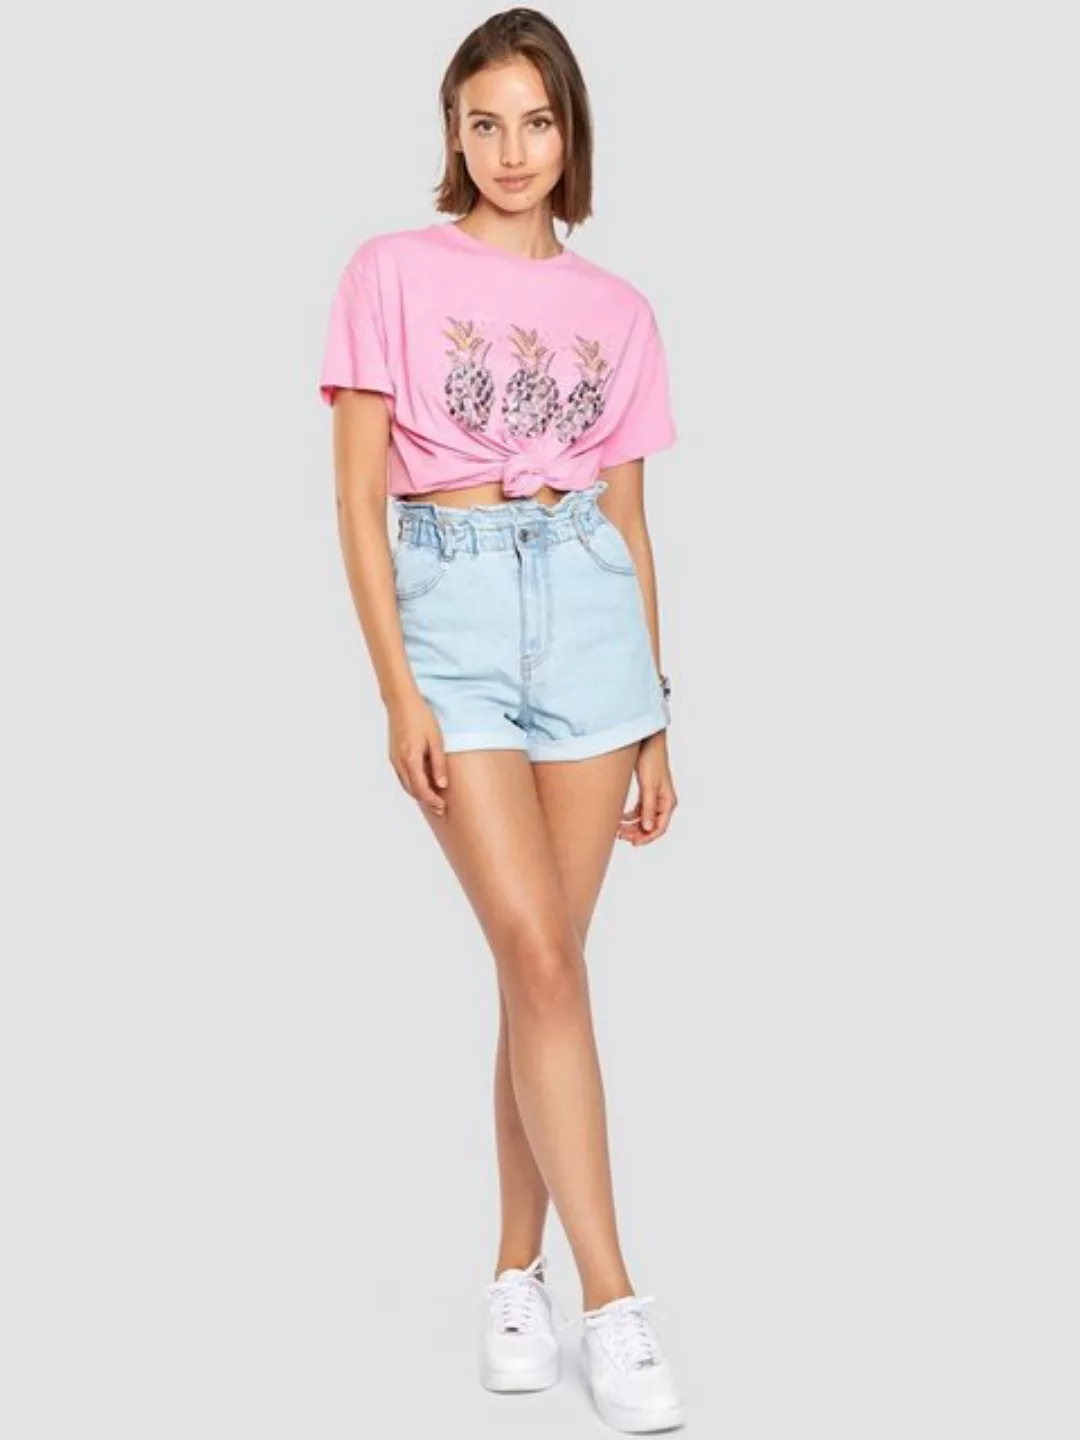 Freshlions T-Shirt T-Shirt Ananas rosa L Pailletten günstig online kaufen